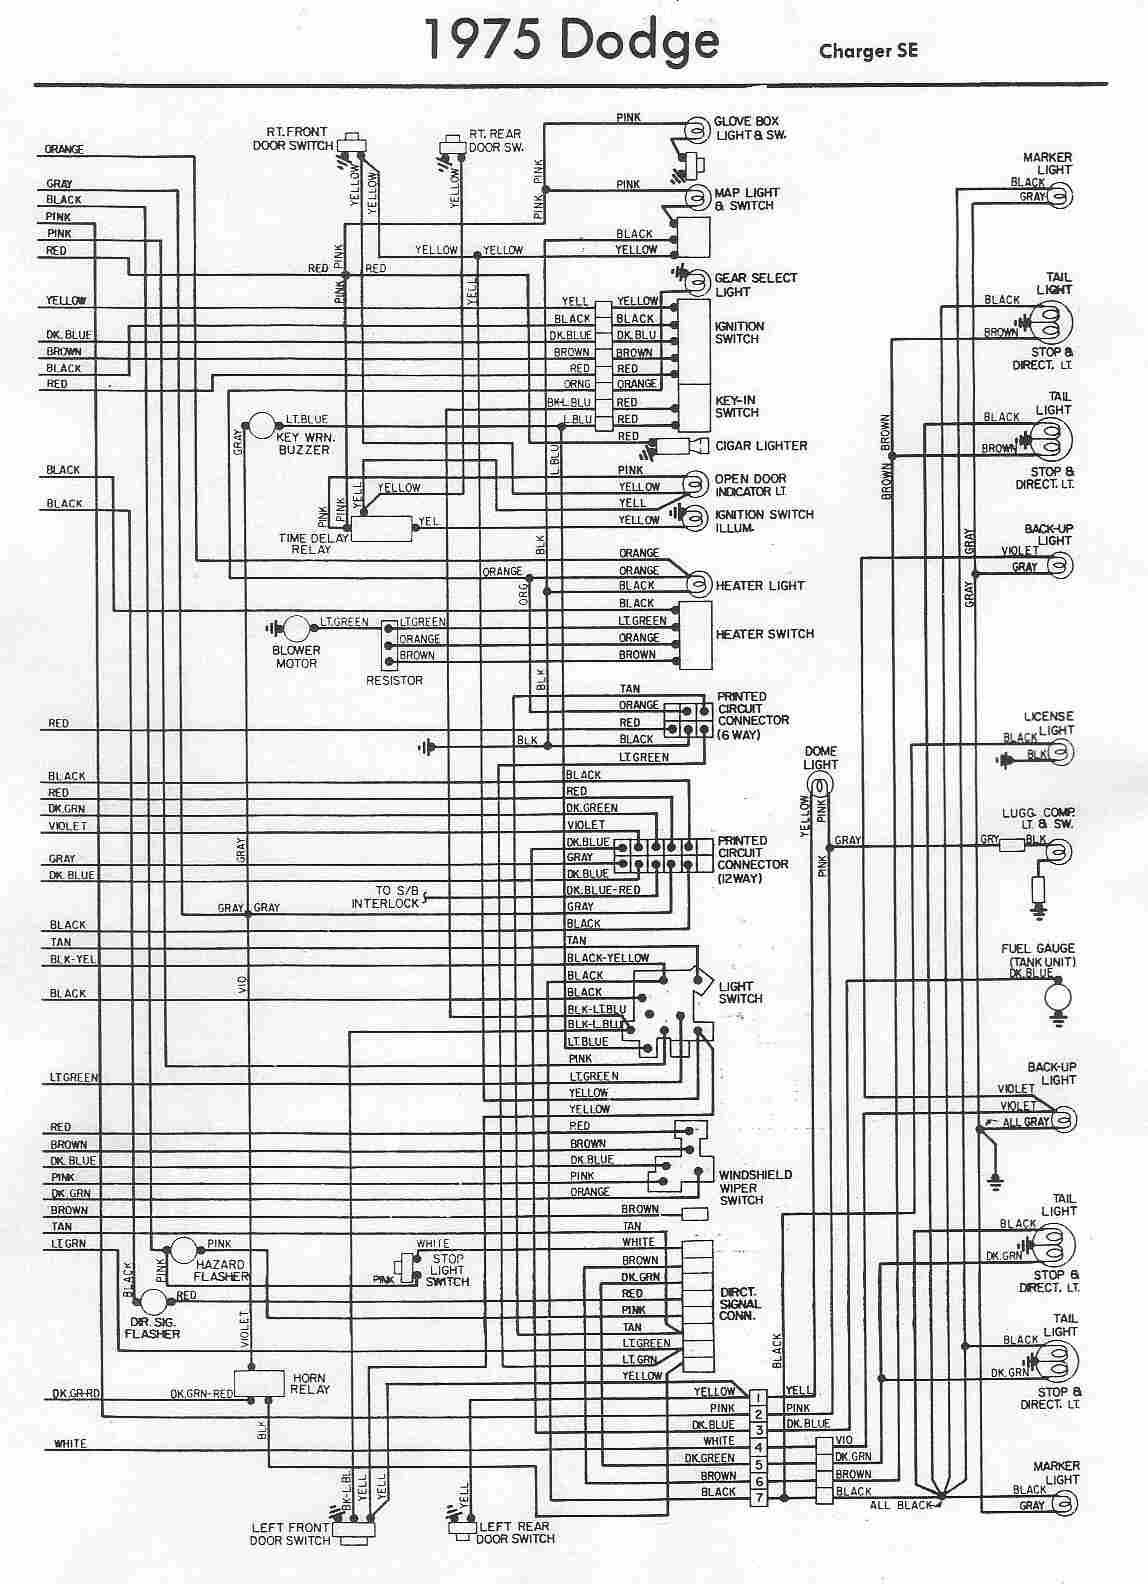 DODGE - Car PDF Manual, Wiring Diagram & Fault Codes DTC  2008 Dodge Caliber 2.0 Brake Light Wiring Diagram Instrument Cluster    automotive-manuals.net